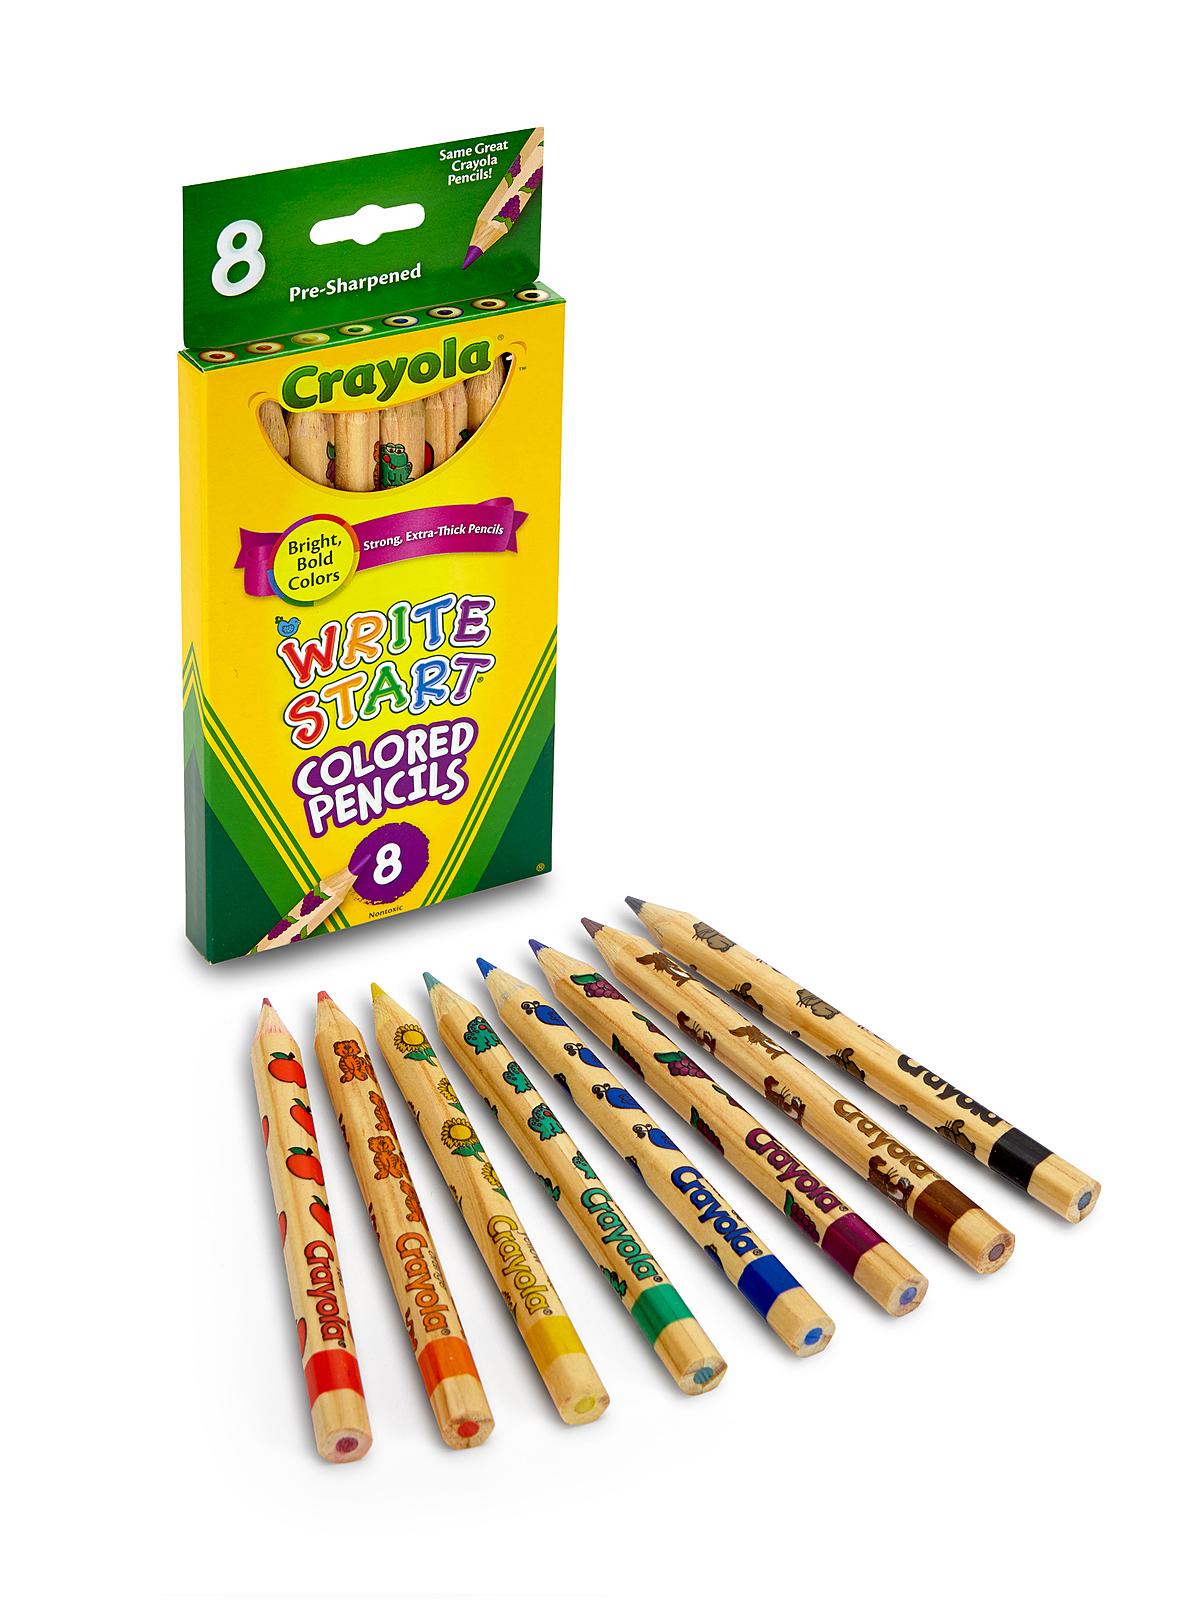 Crayola - Write Start Colored Pencils